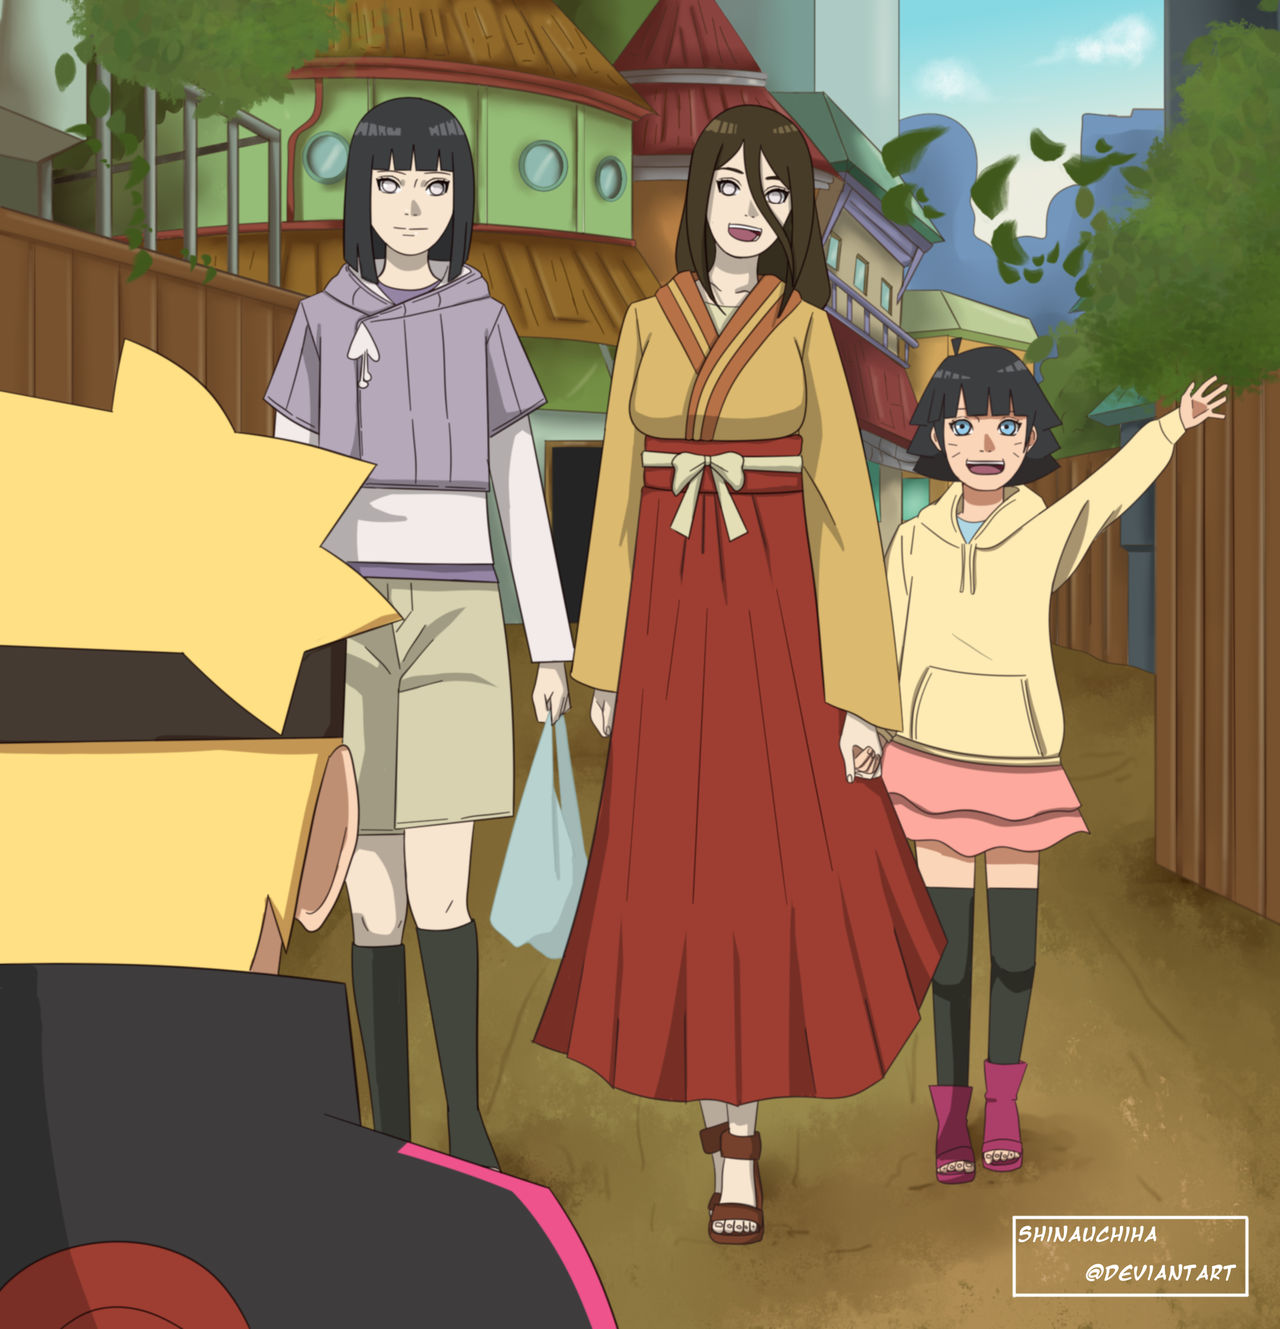 Boruto: Naruto Next Generations Shippuden by shinauchiha on DeviantArt